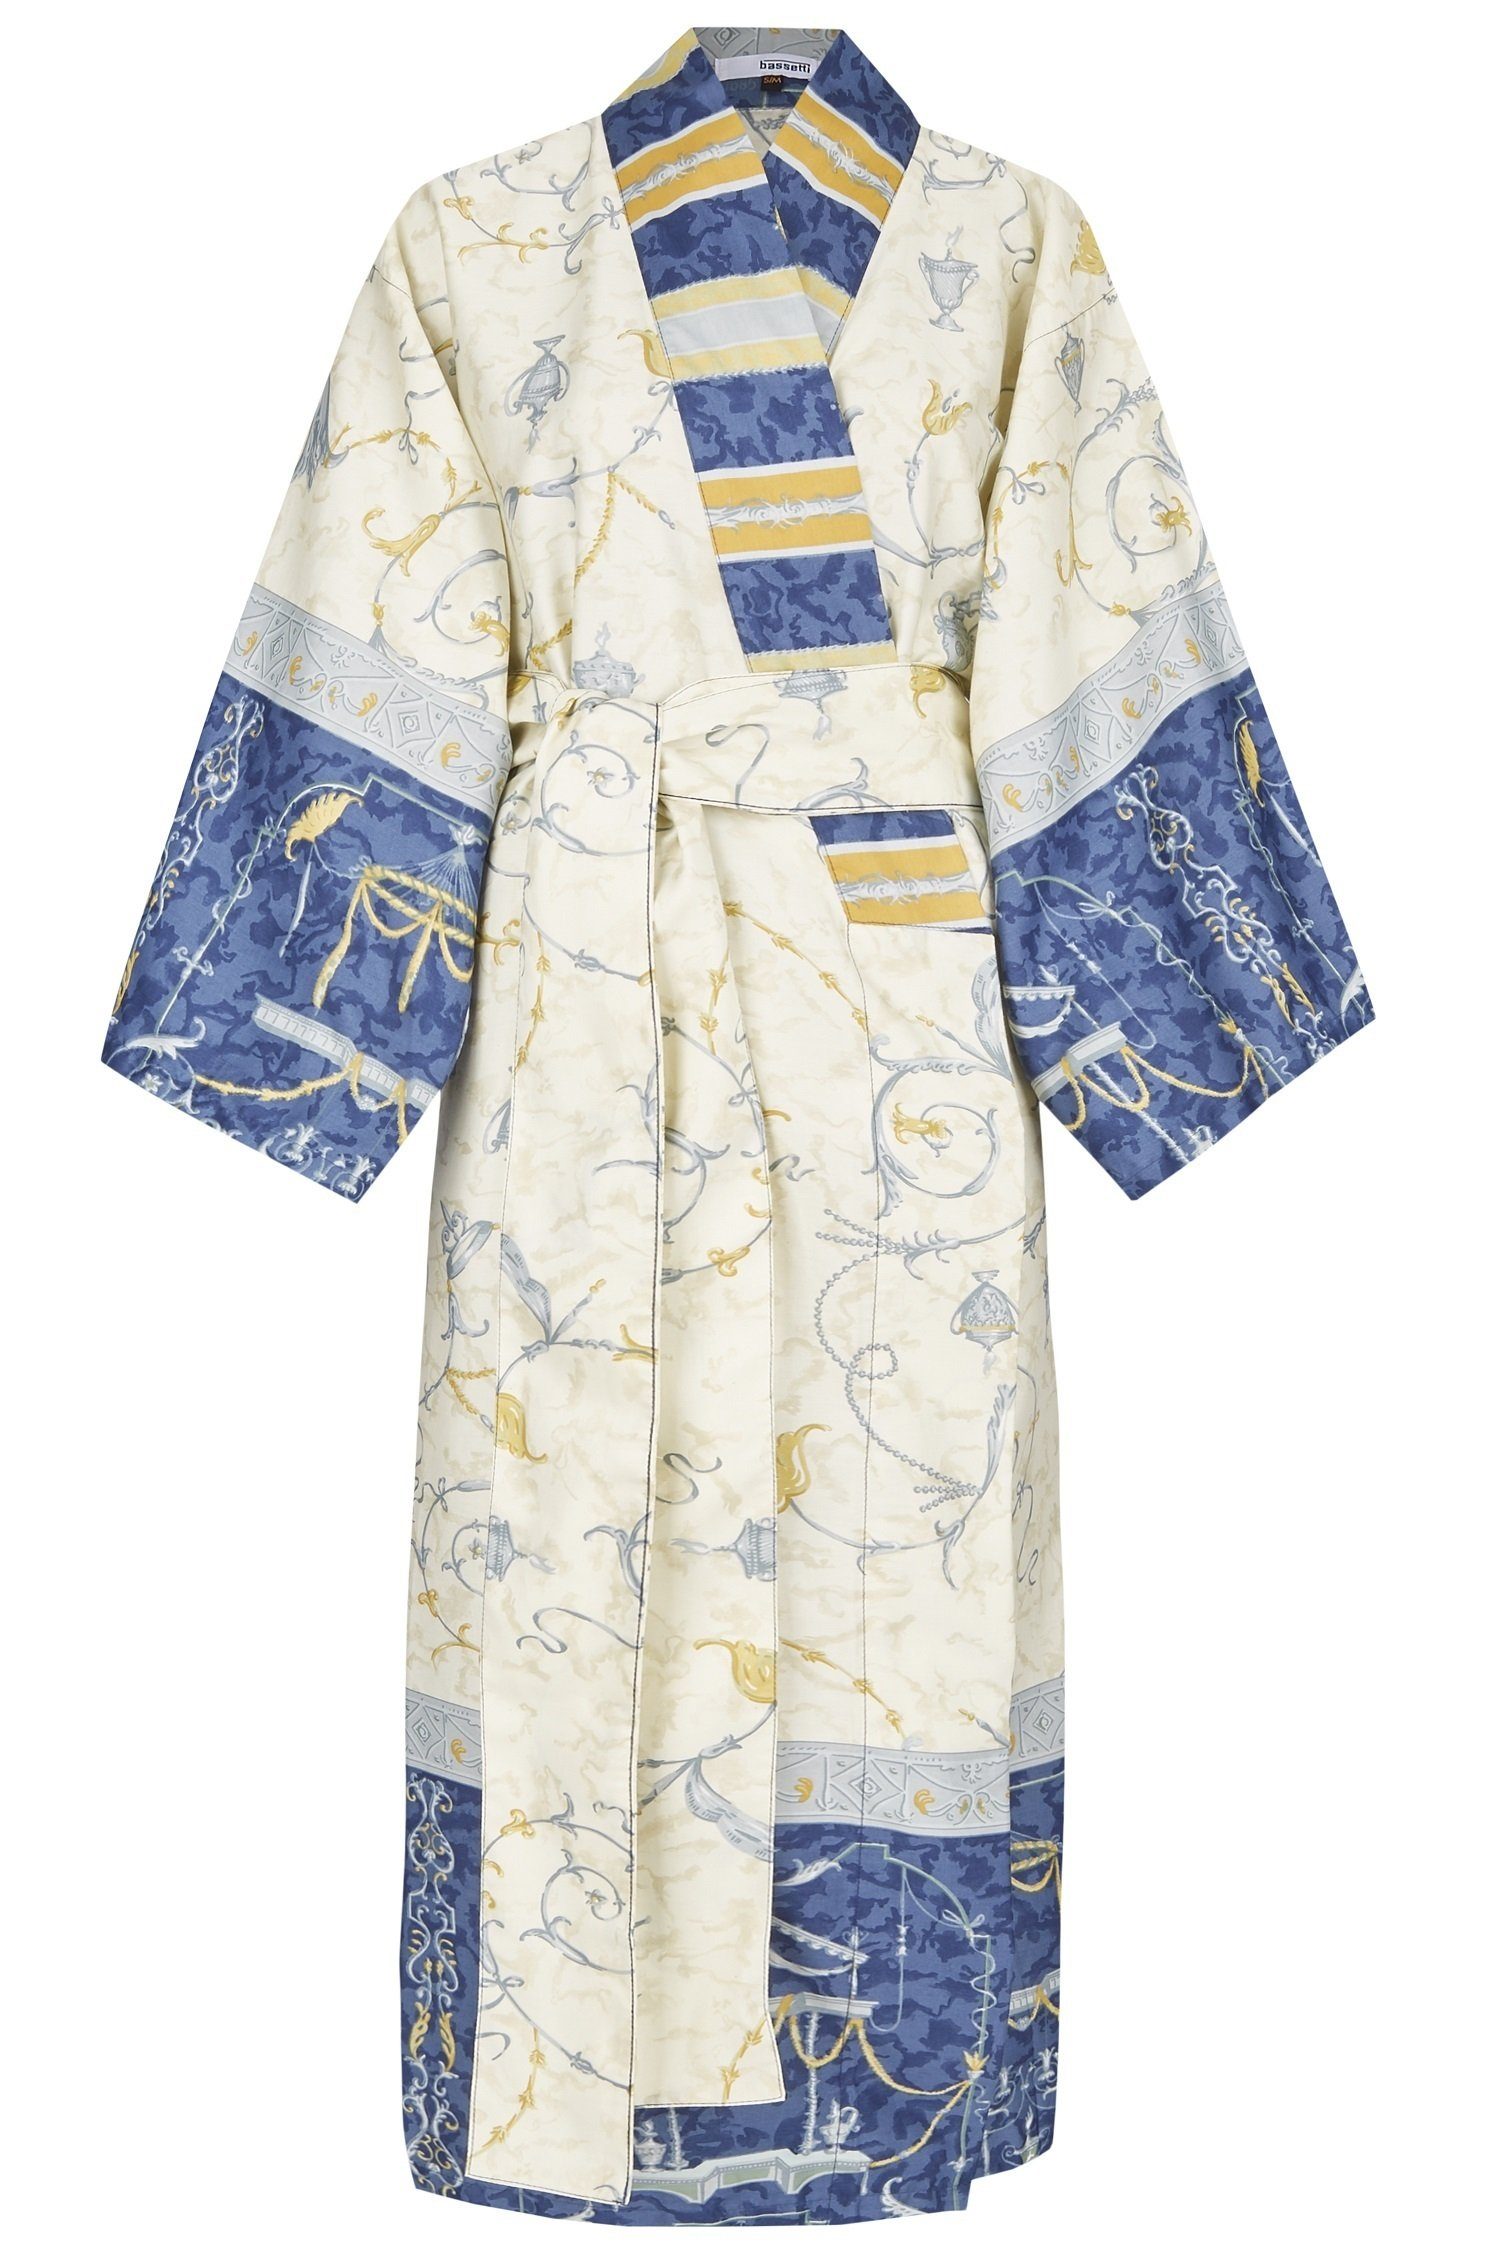 Bassetti Kimono OPLONTIS, knöchelfrei, Baumwolle, Gürtel, aus satinierter Baumwolle blau